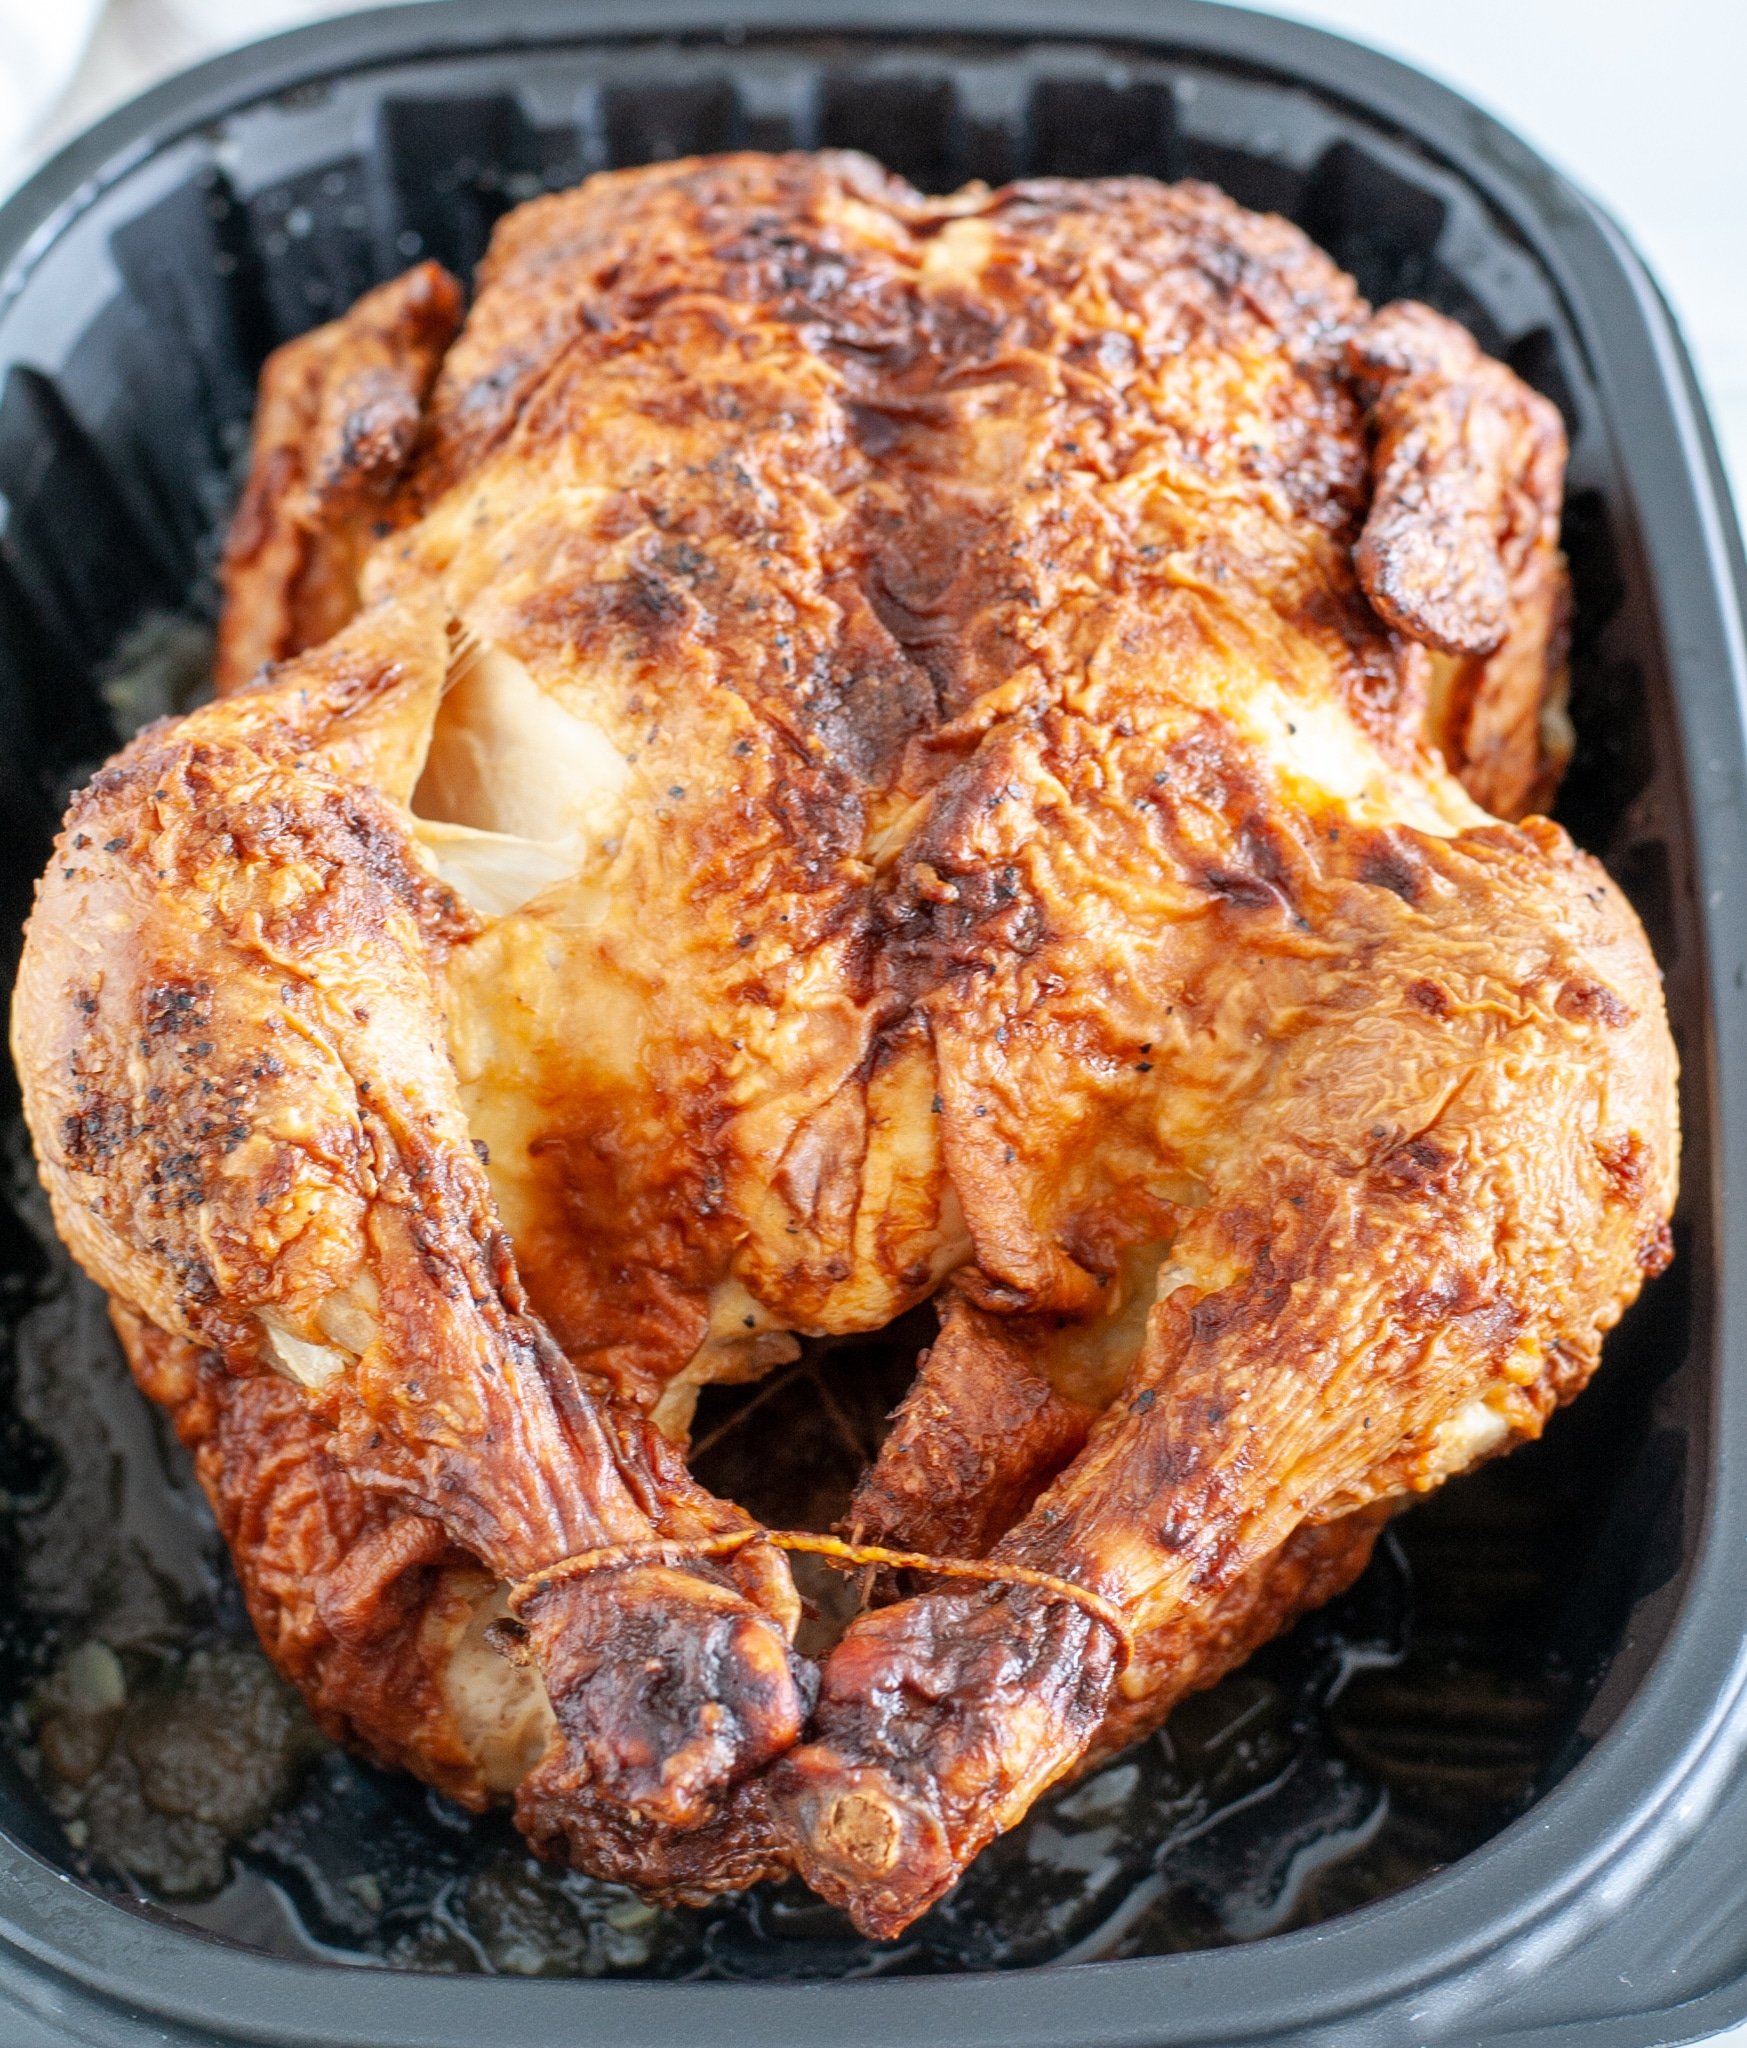 https://www.foodlovinfamily.com/wp-content/uploads/2021/02/How-to-reheat-rotisserie-chicken.jpg